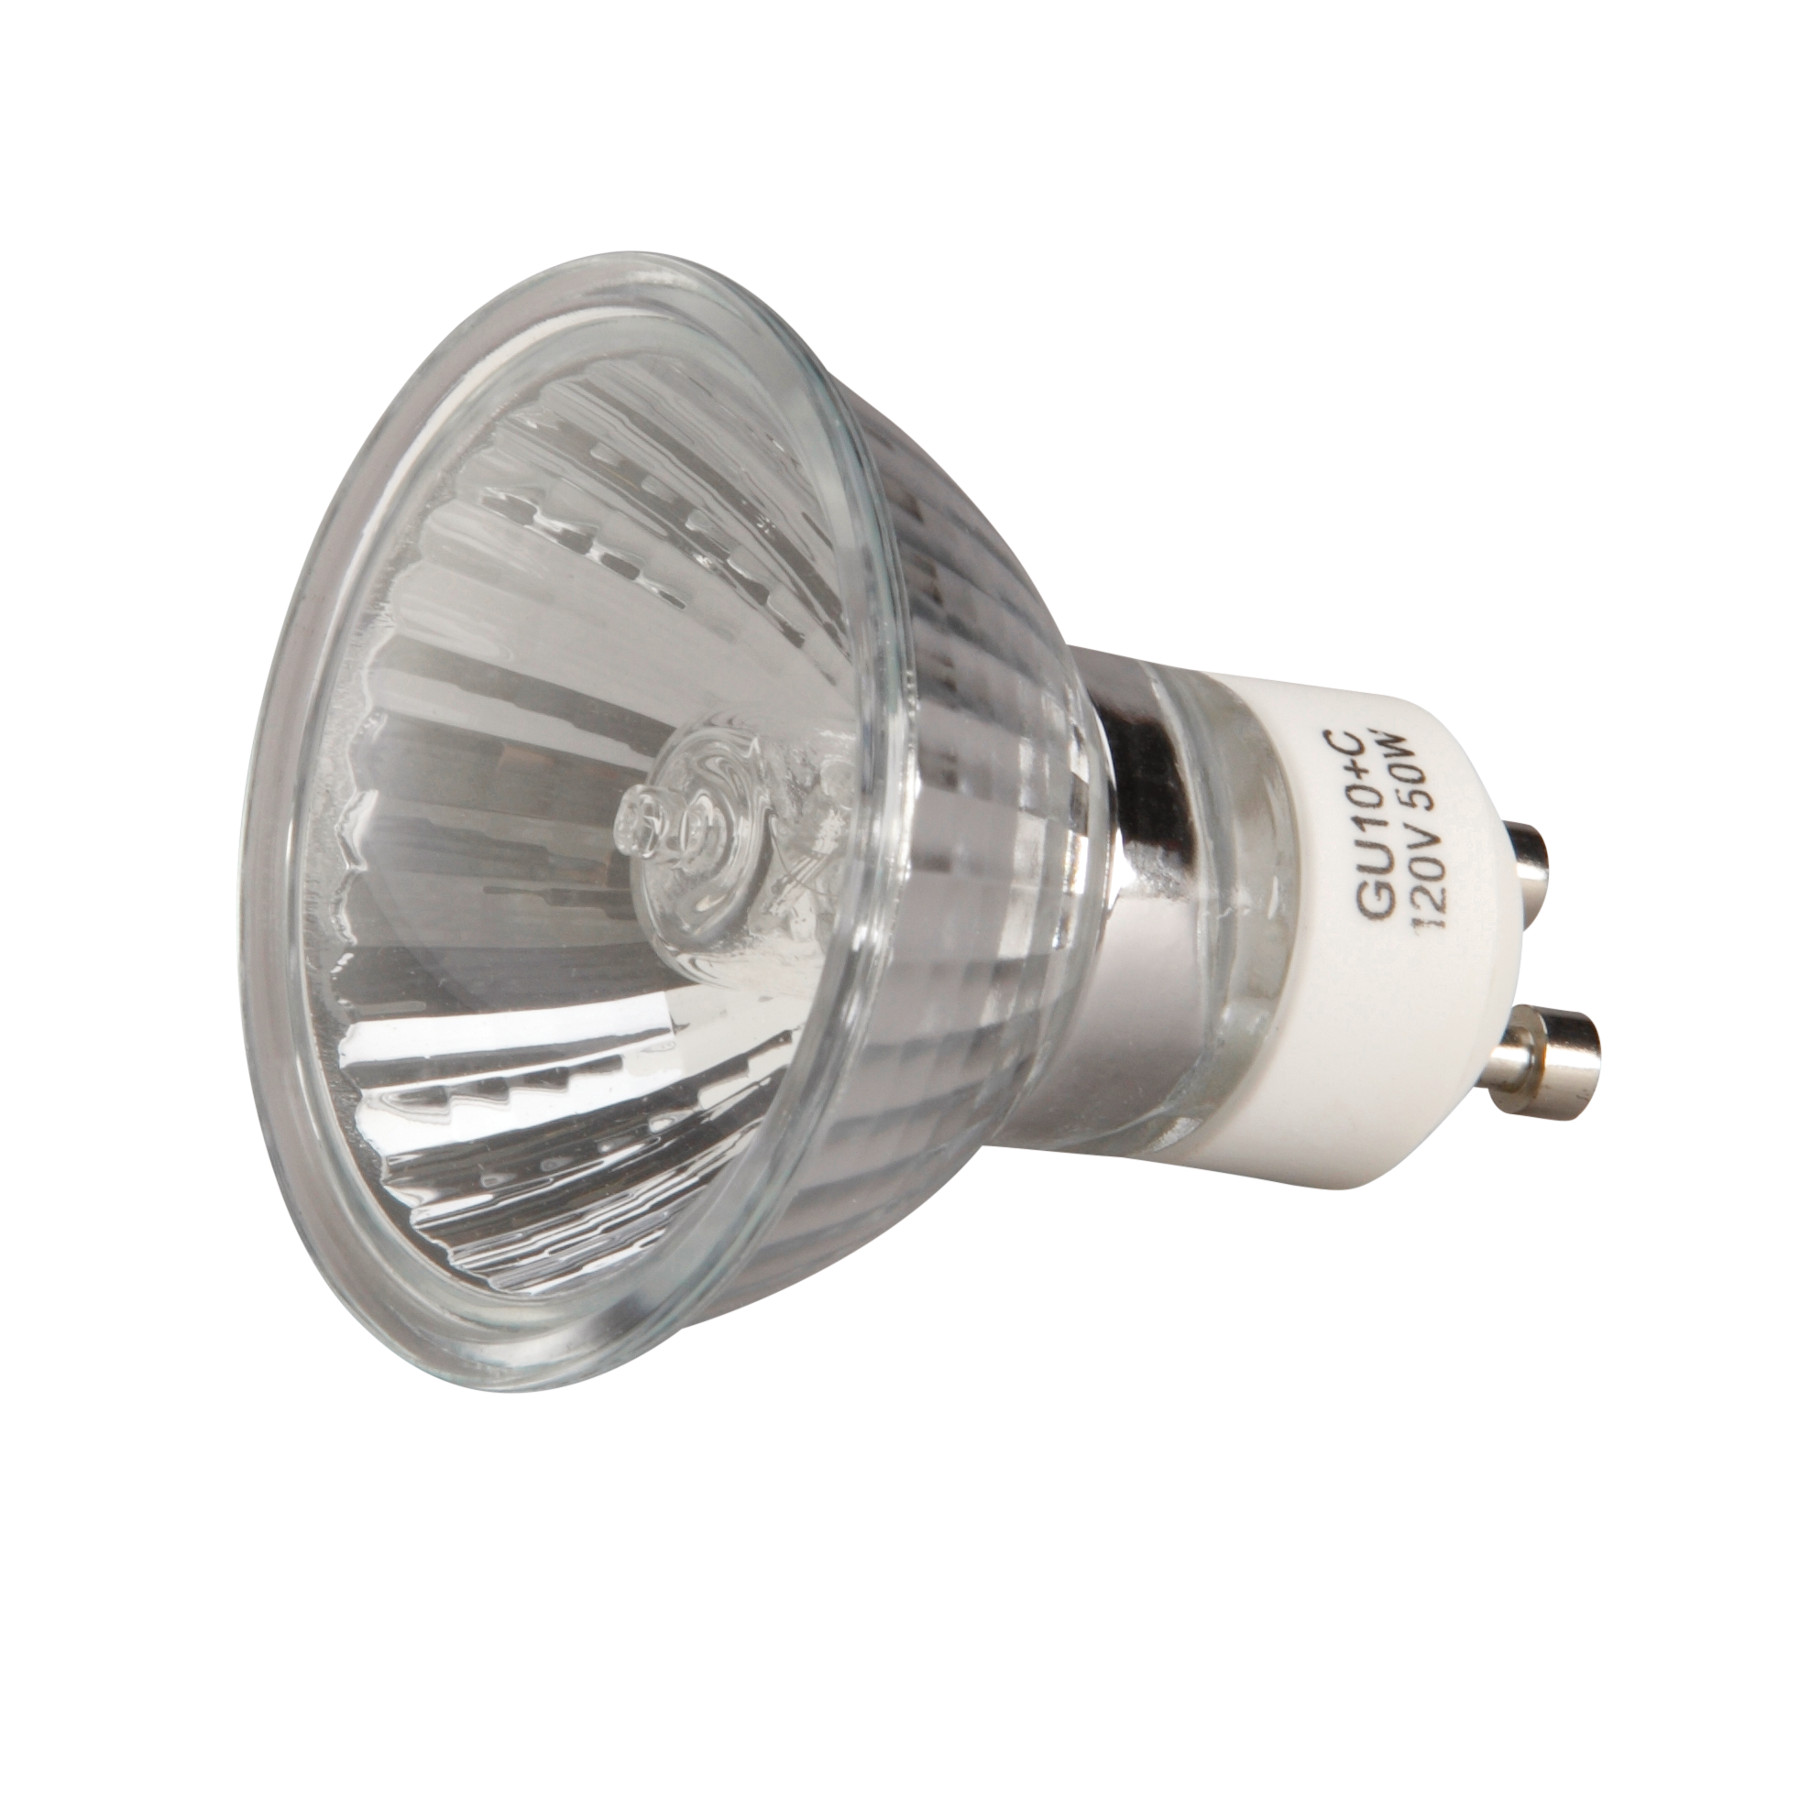 Details about   Broan Range Hood Light Bulb Part # LED10818A 